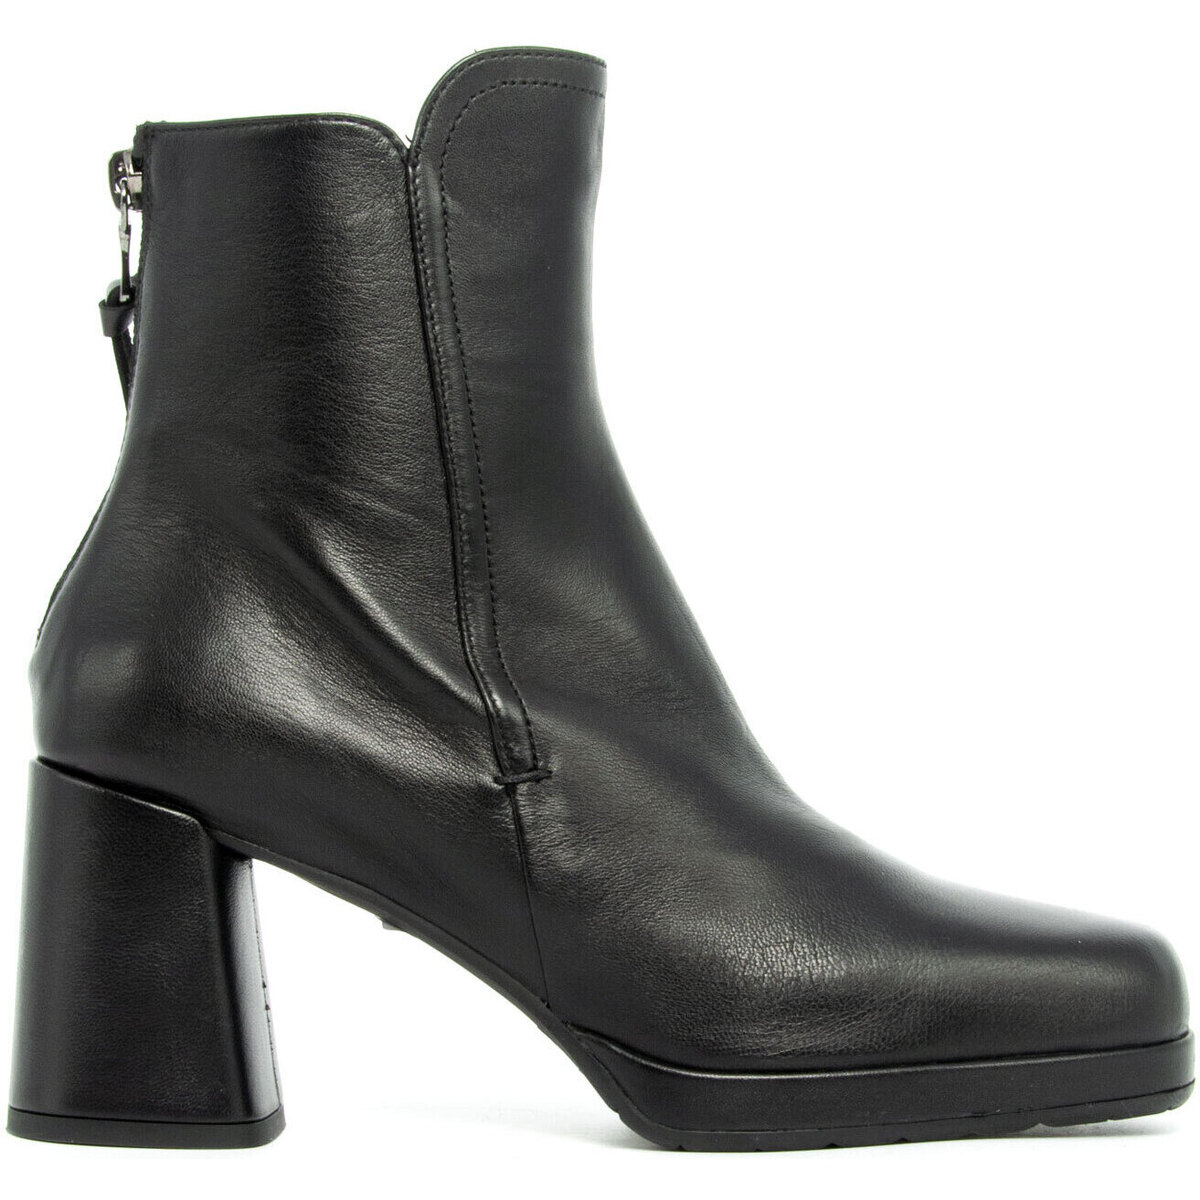 Chaussures Femme prm Boots Mara Bini W232145-NERO Noir